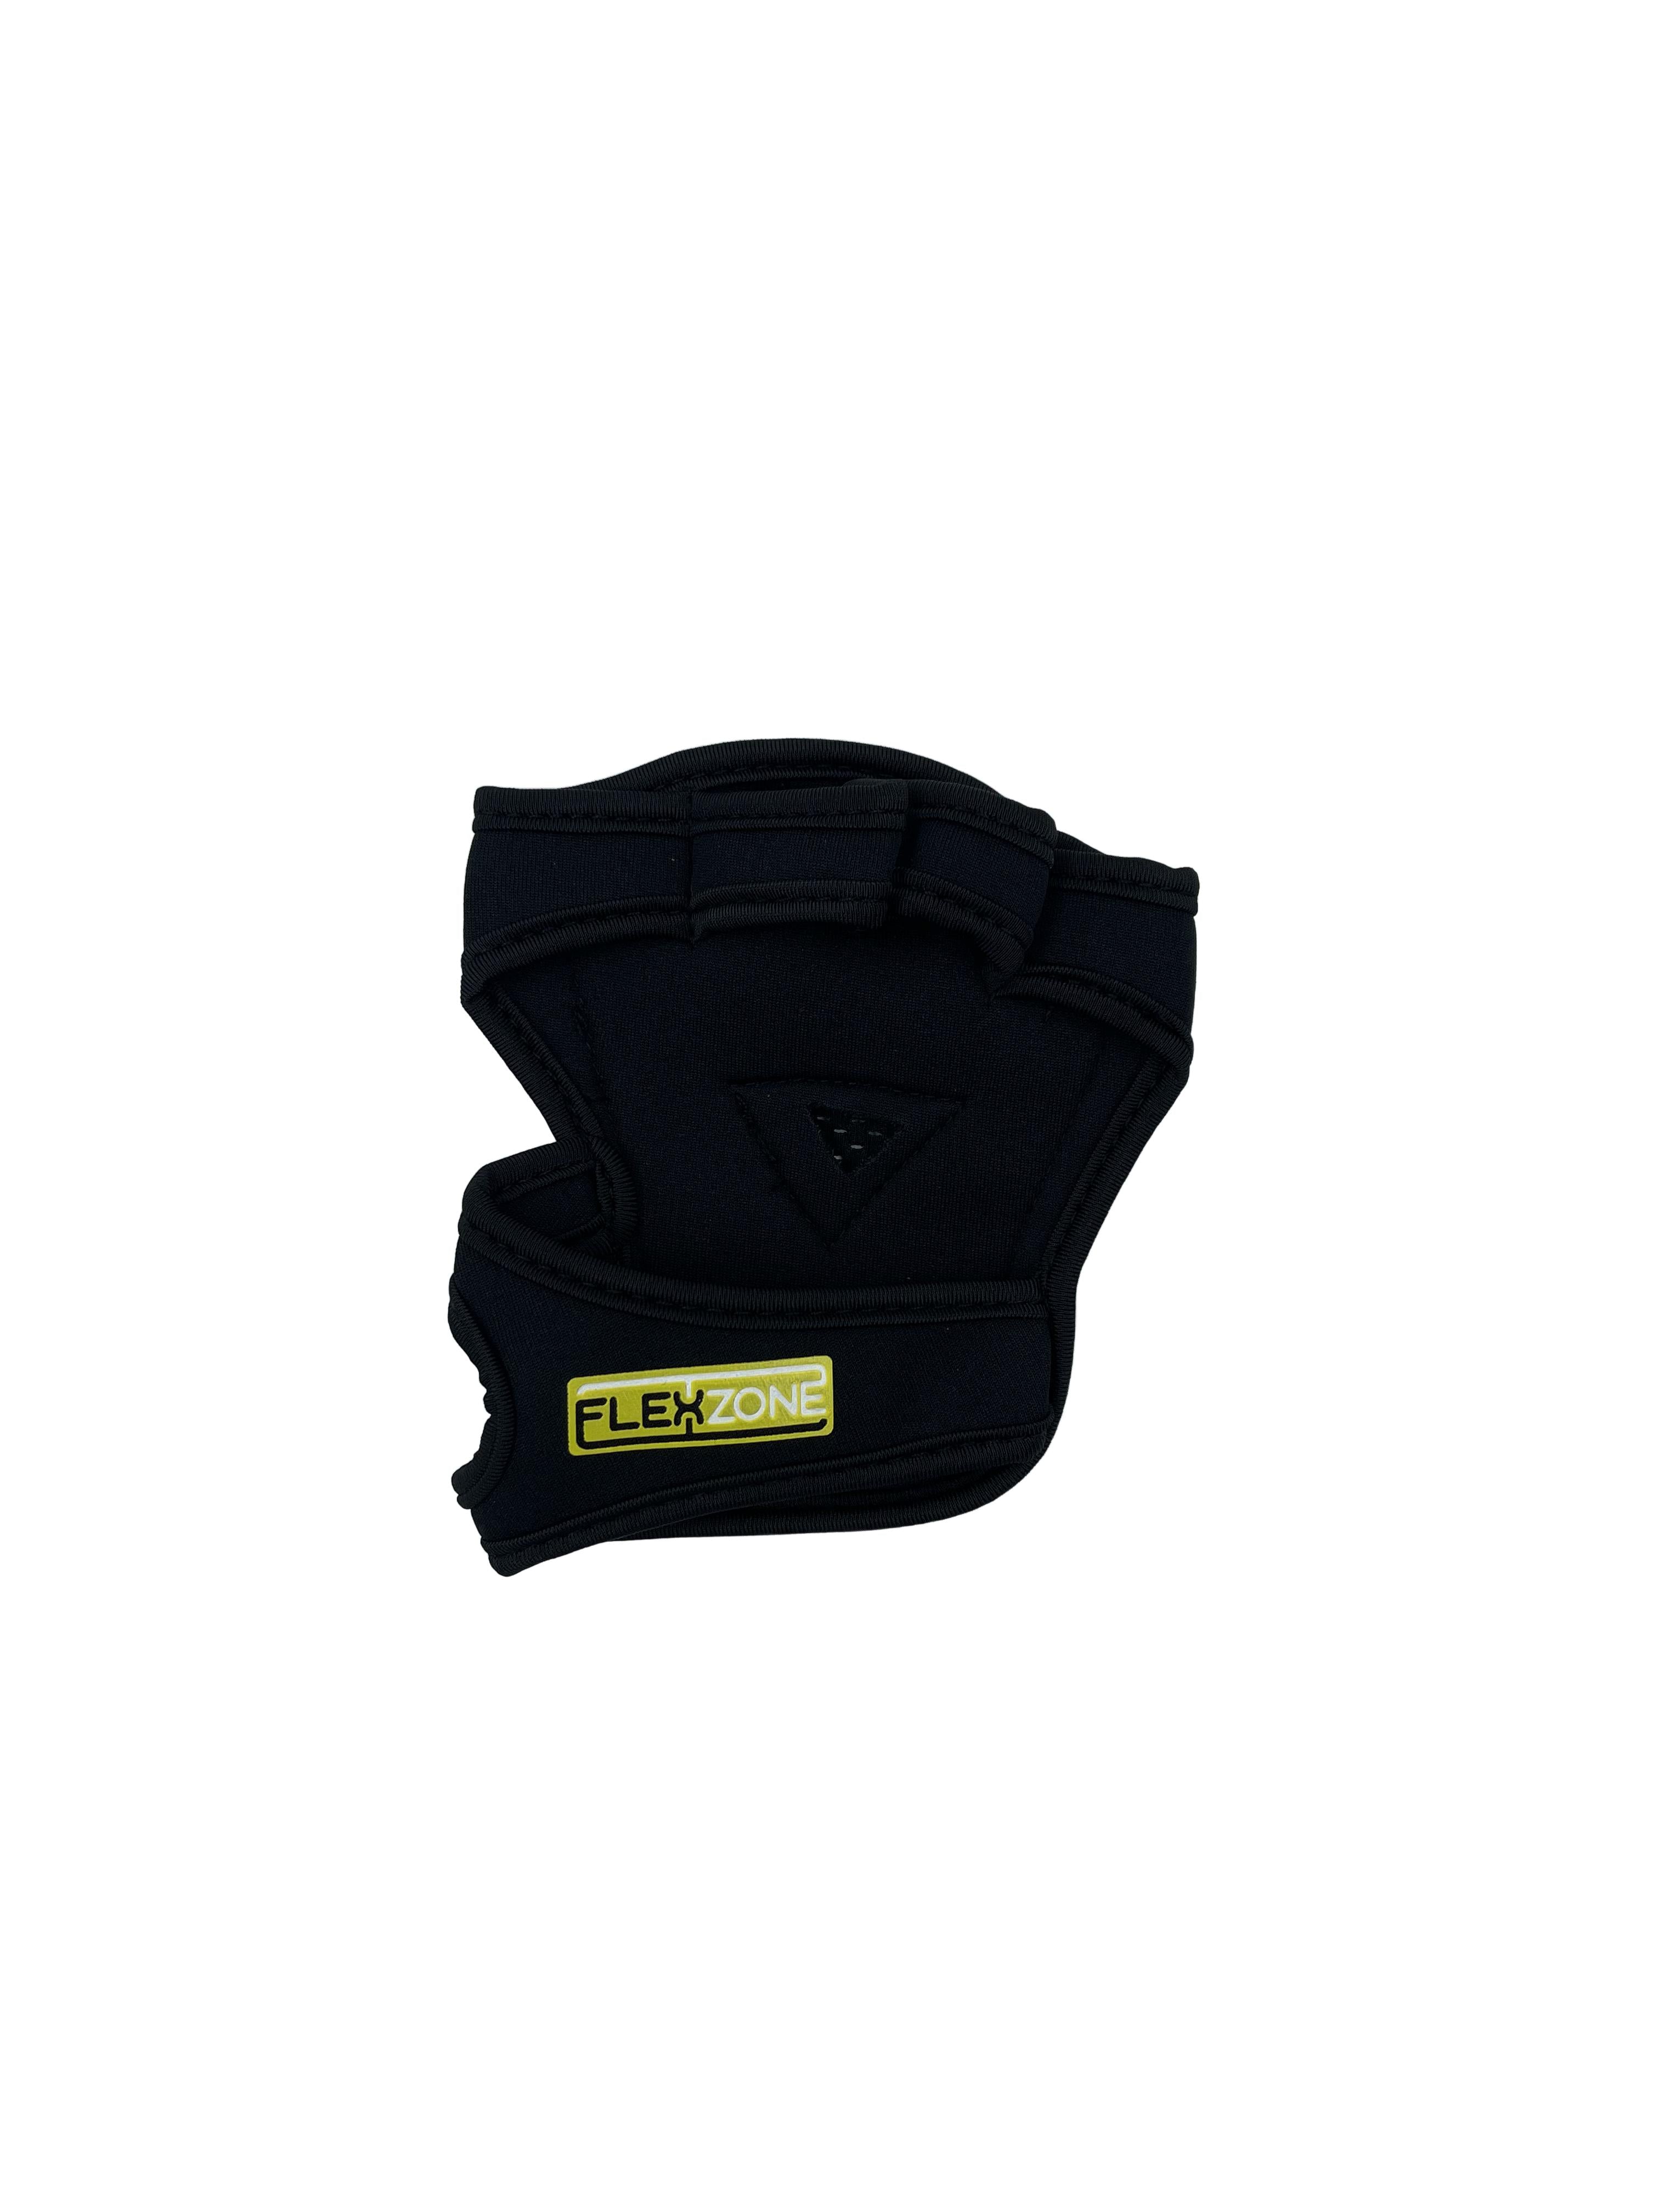 Flexzone Workout Gloves without Wrist Wraps - قفازات تمرين بدون أربطة المعصم  من فليكس زون